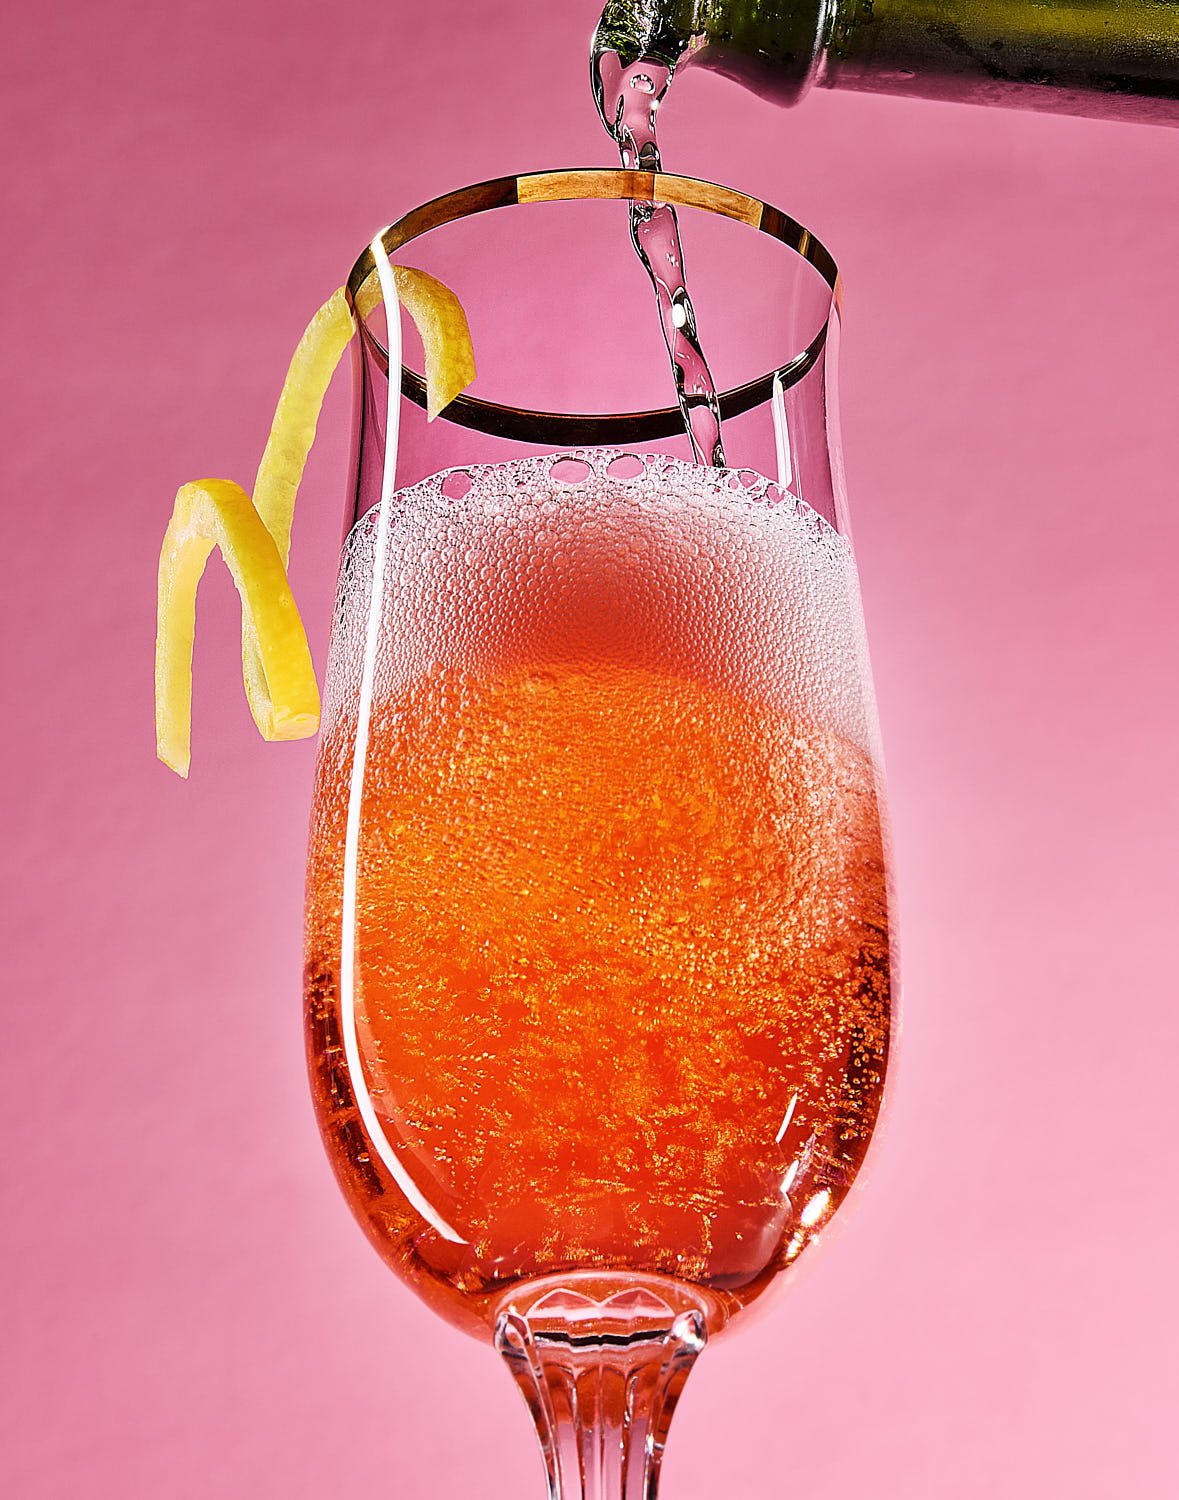 Orlando-Beverage-Photographer-Mike-Gluckman-Pink-Champs